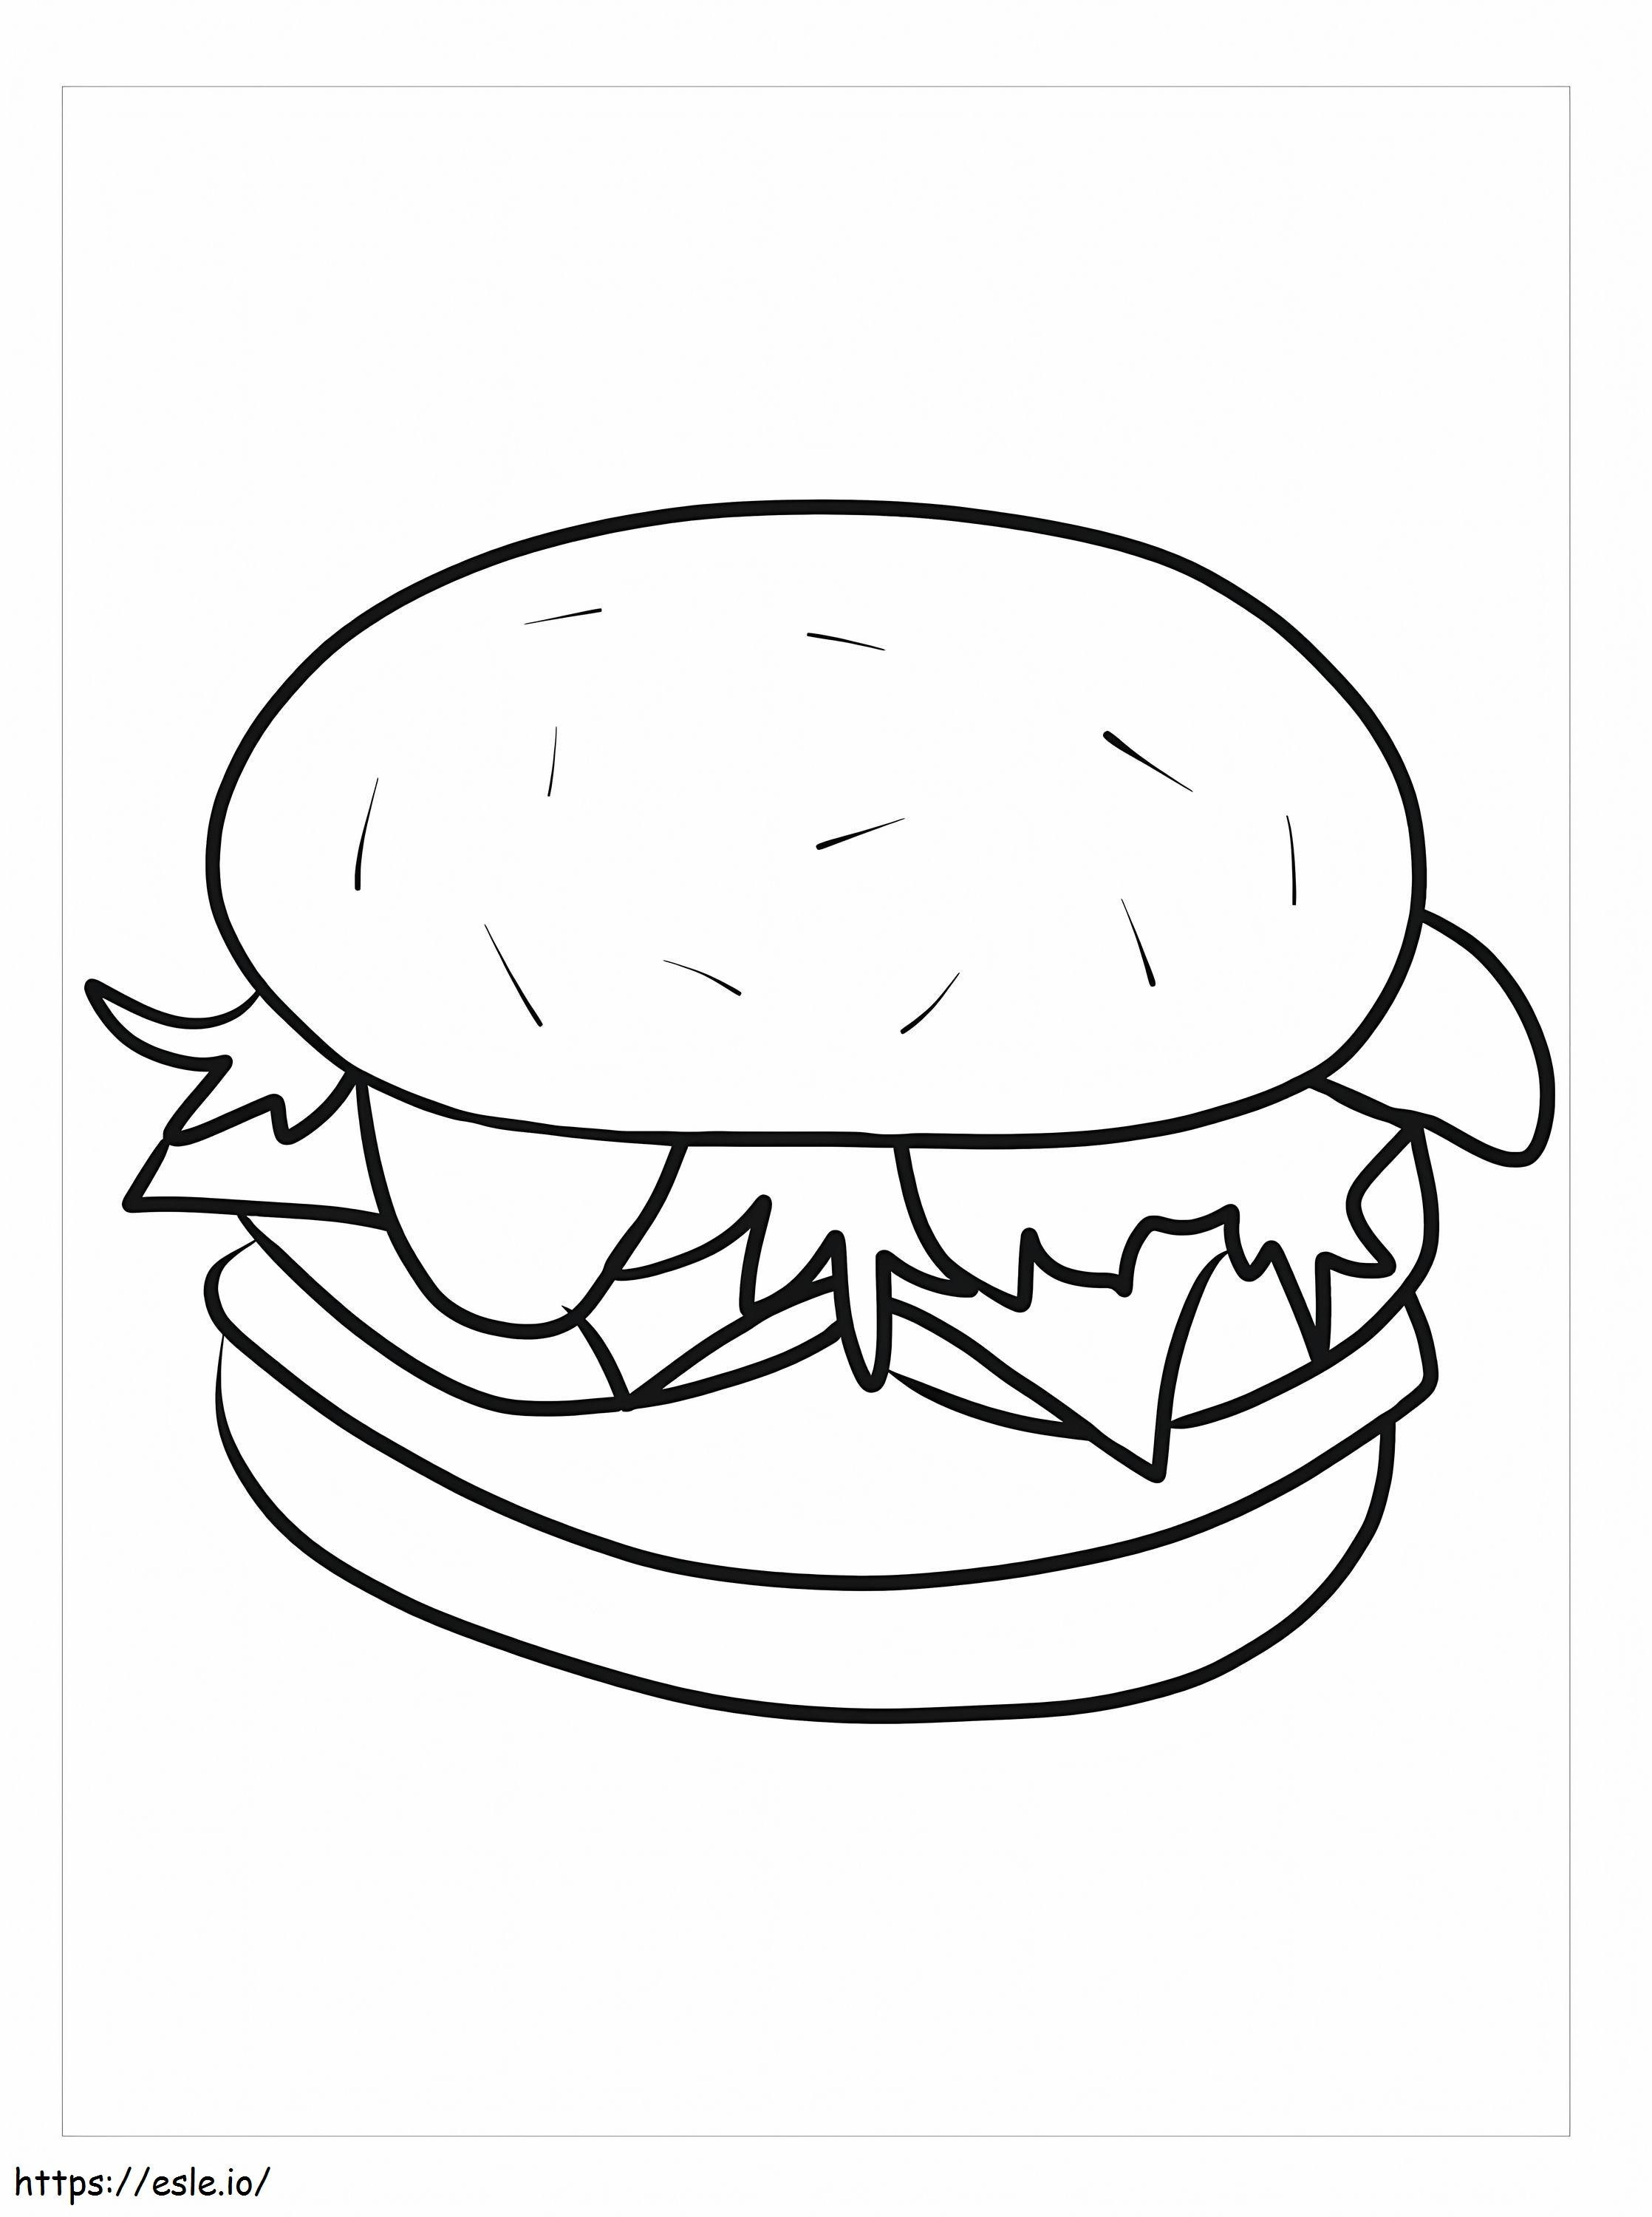 Toller Burger ausmalbilder